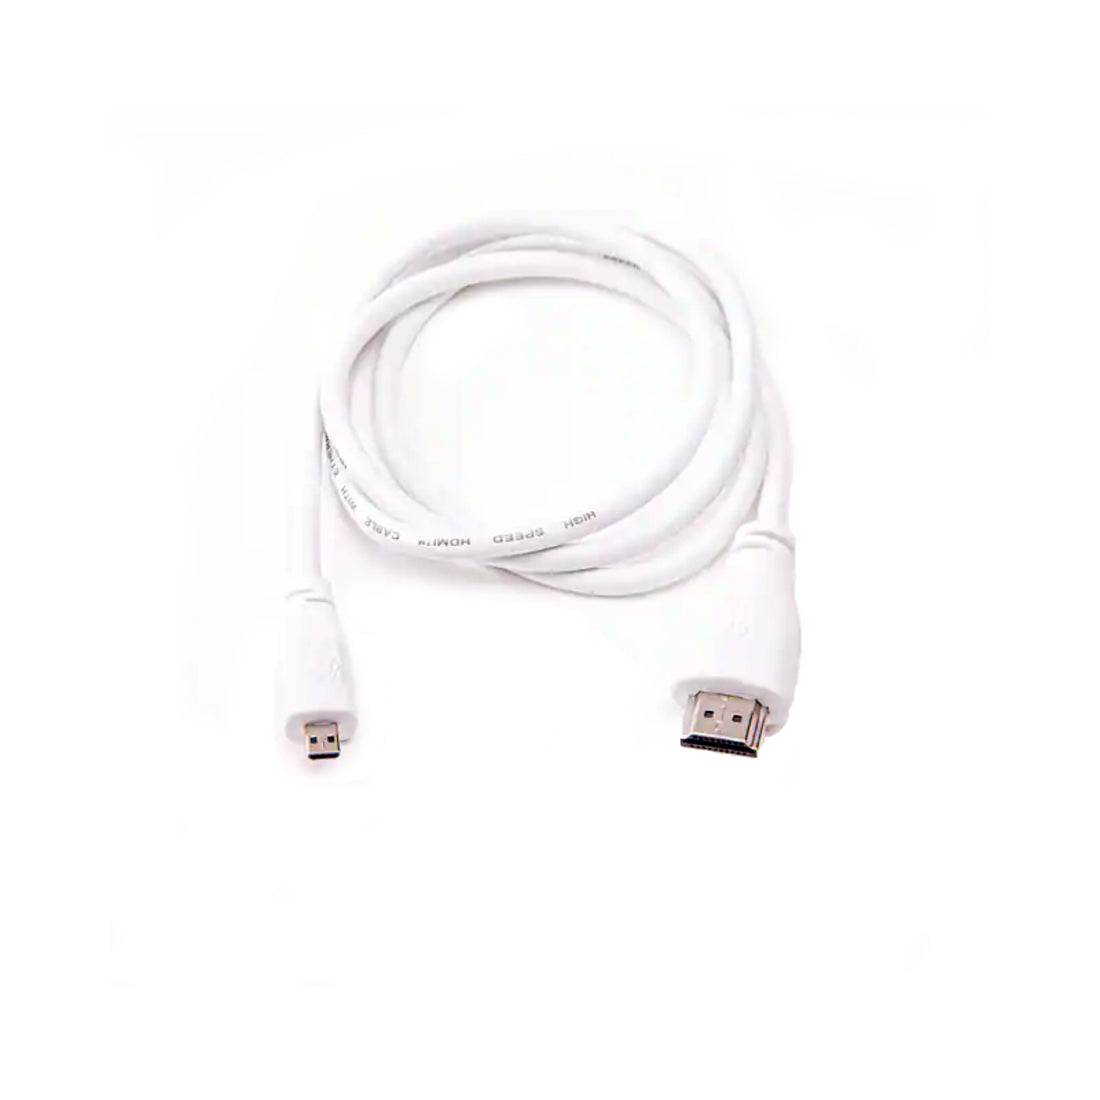 Official Raspberry Pi 1m Micro HDMI to HDMI Cable (White) for Raspberry Pi 4